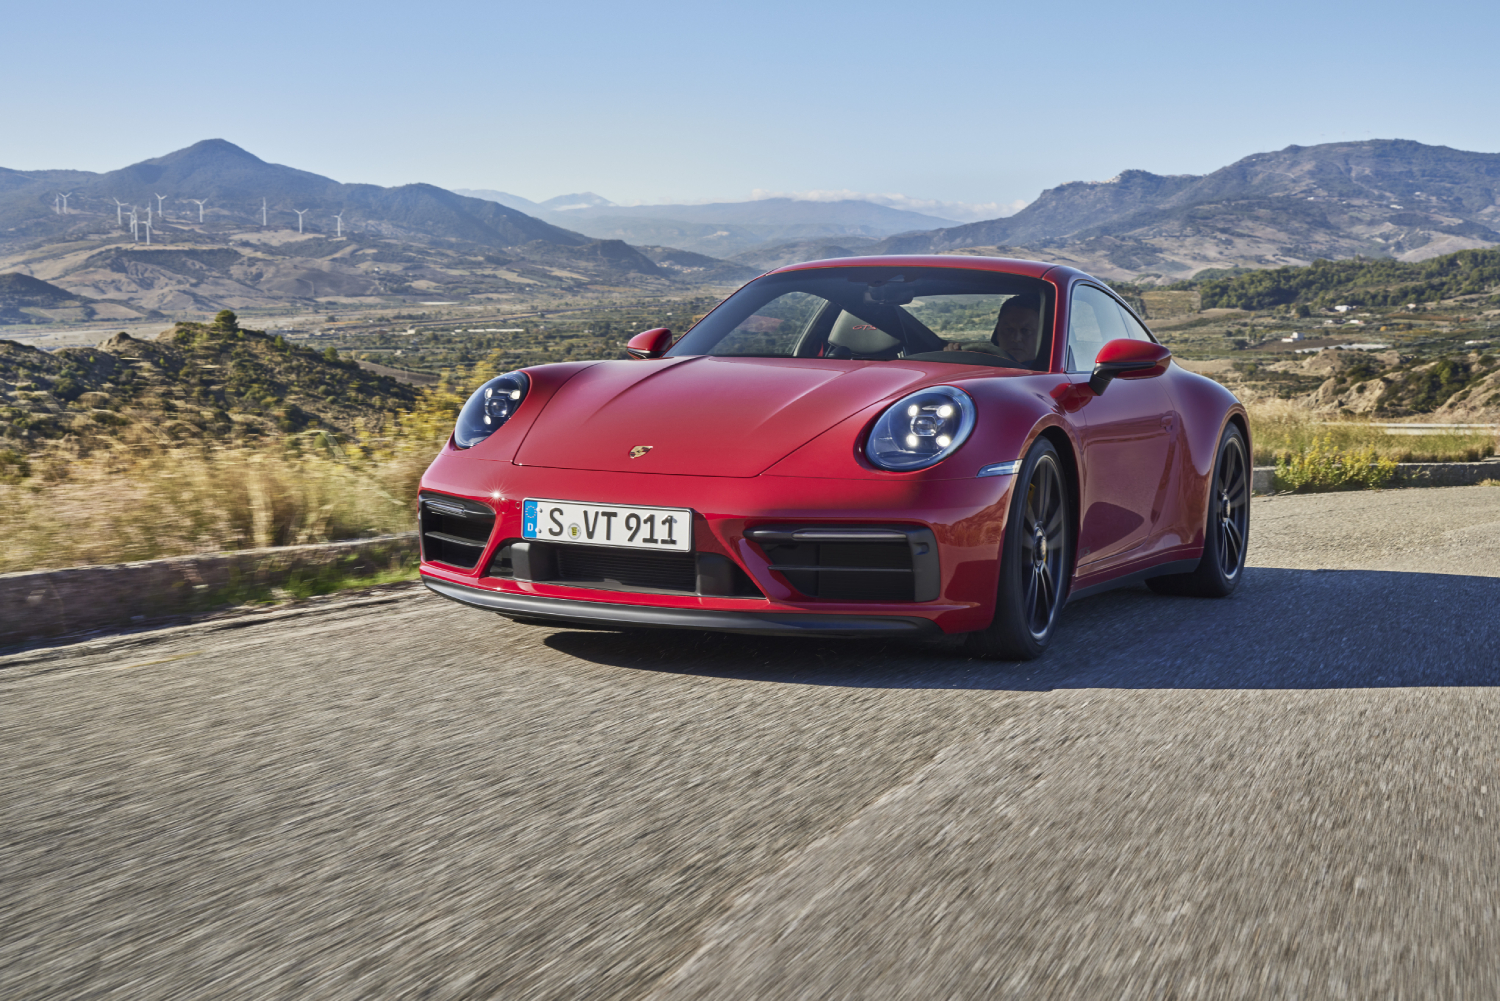 The Porsche 911 is a reliable luxury car